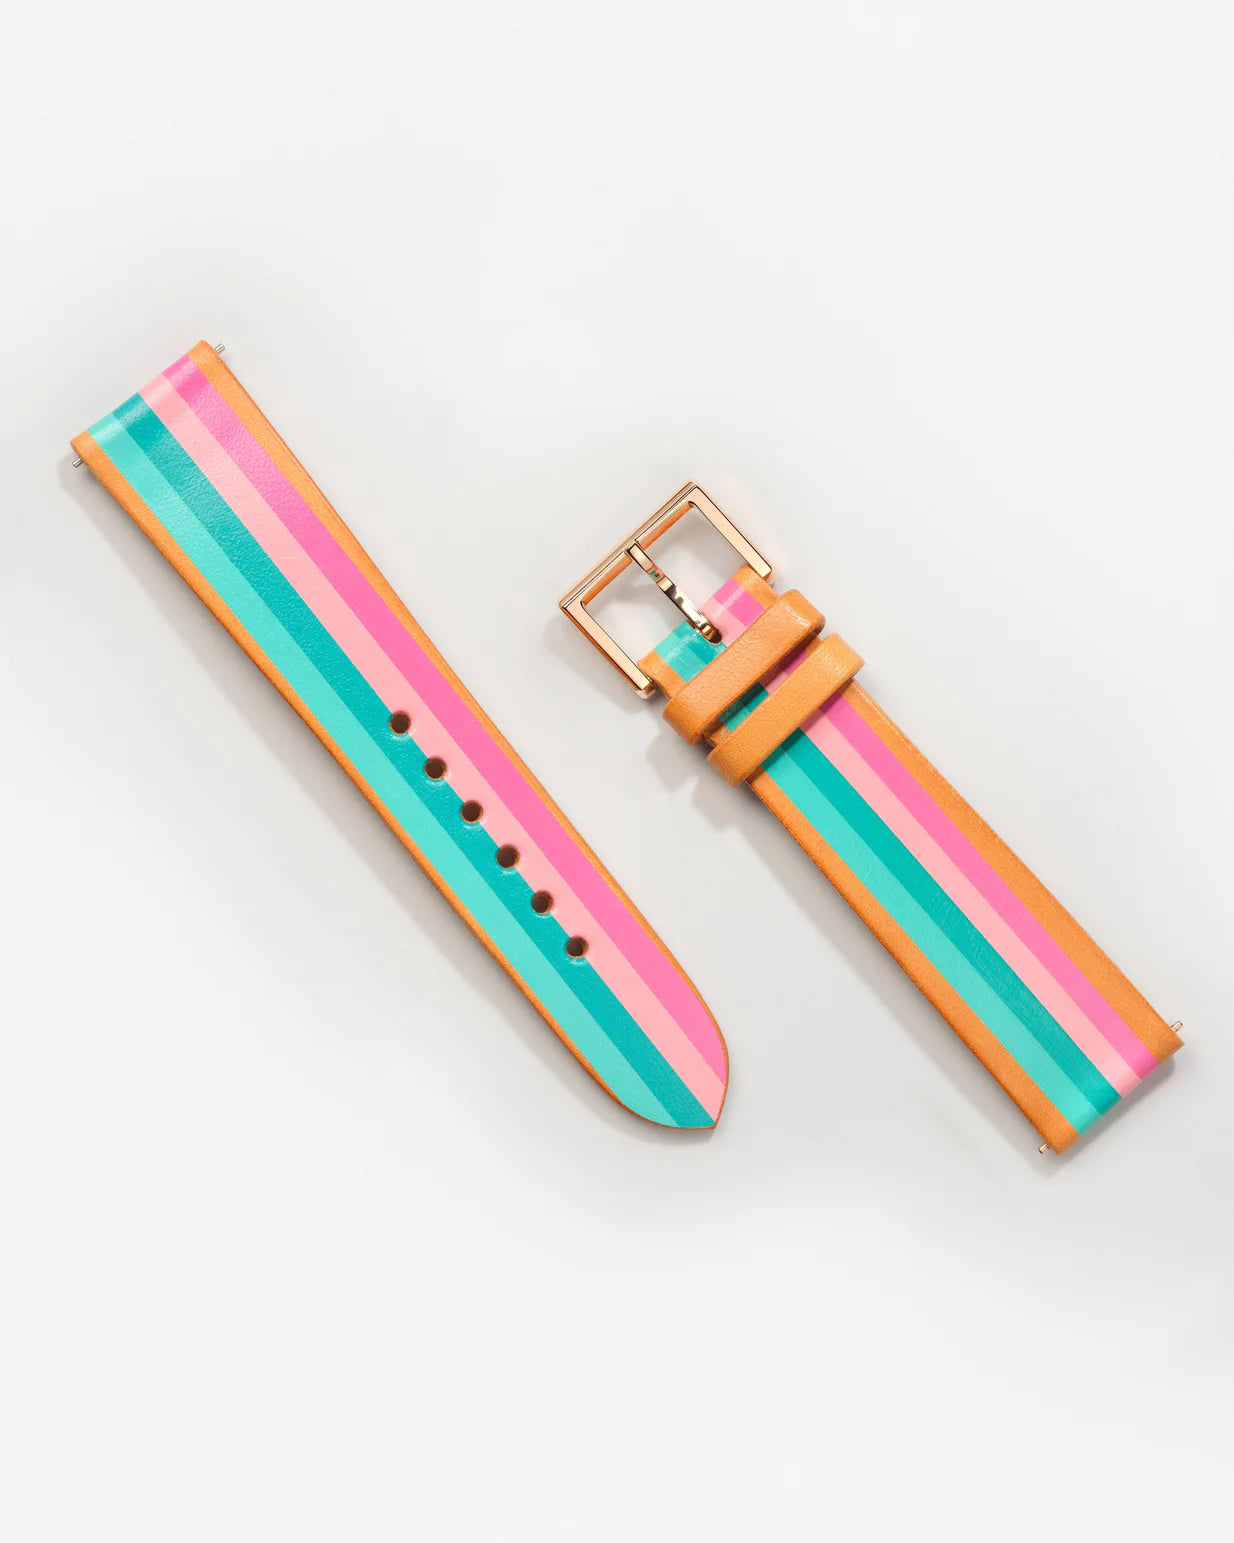 laCalifornienne custom strap 19mm - Fiore (Light Aqua/Dark Aqua/Light Pink/Dark Pink)